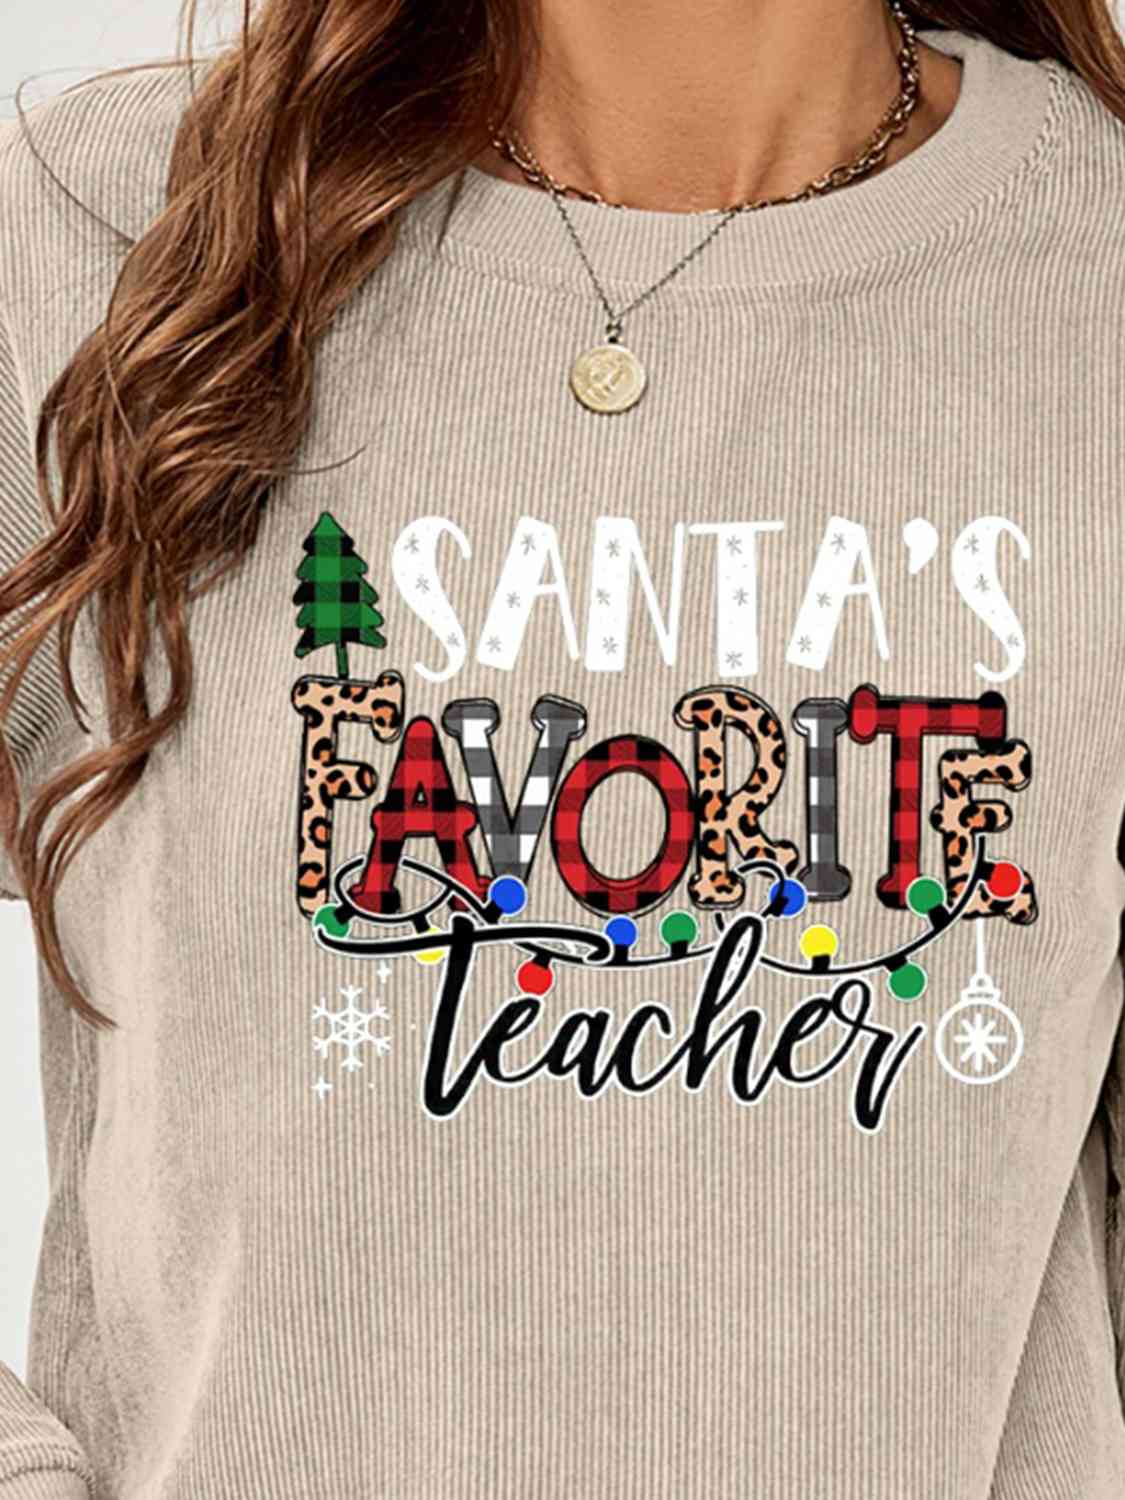 SANTA'S FAVORITE TEACHER Graphic Sweatshirt